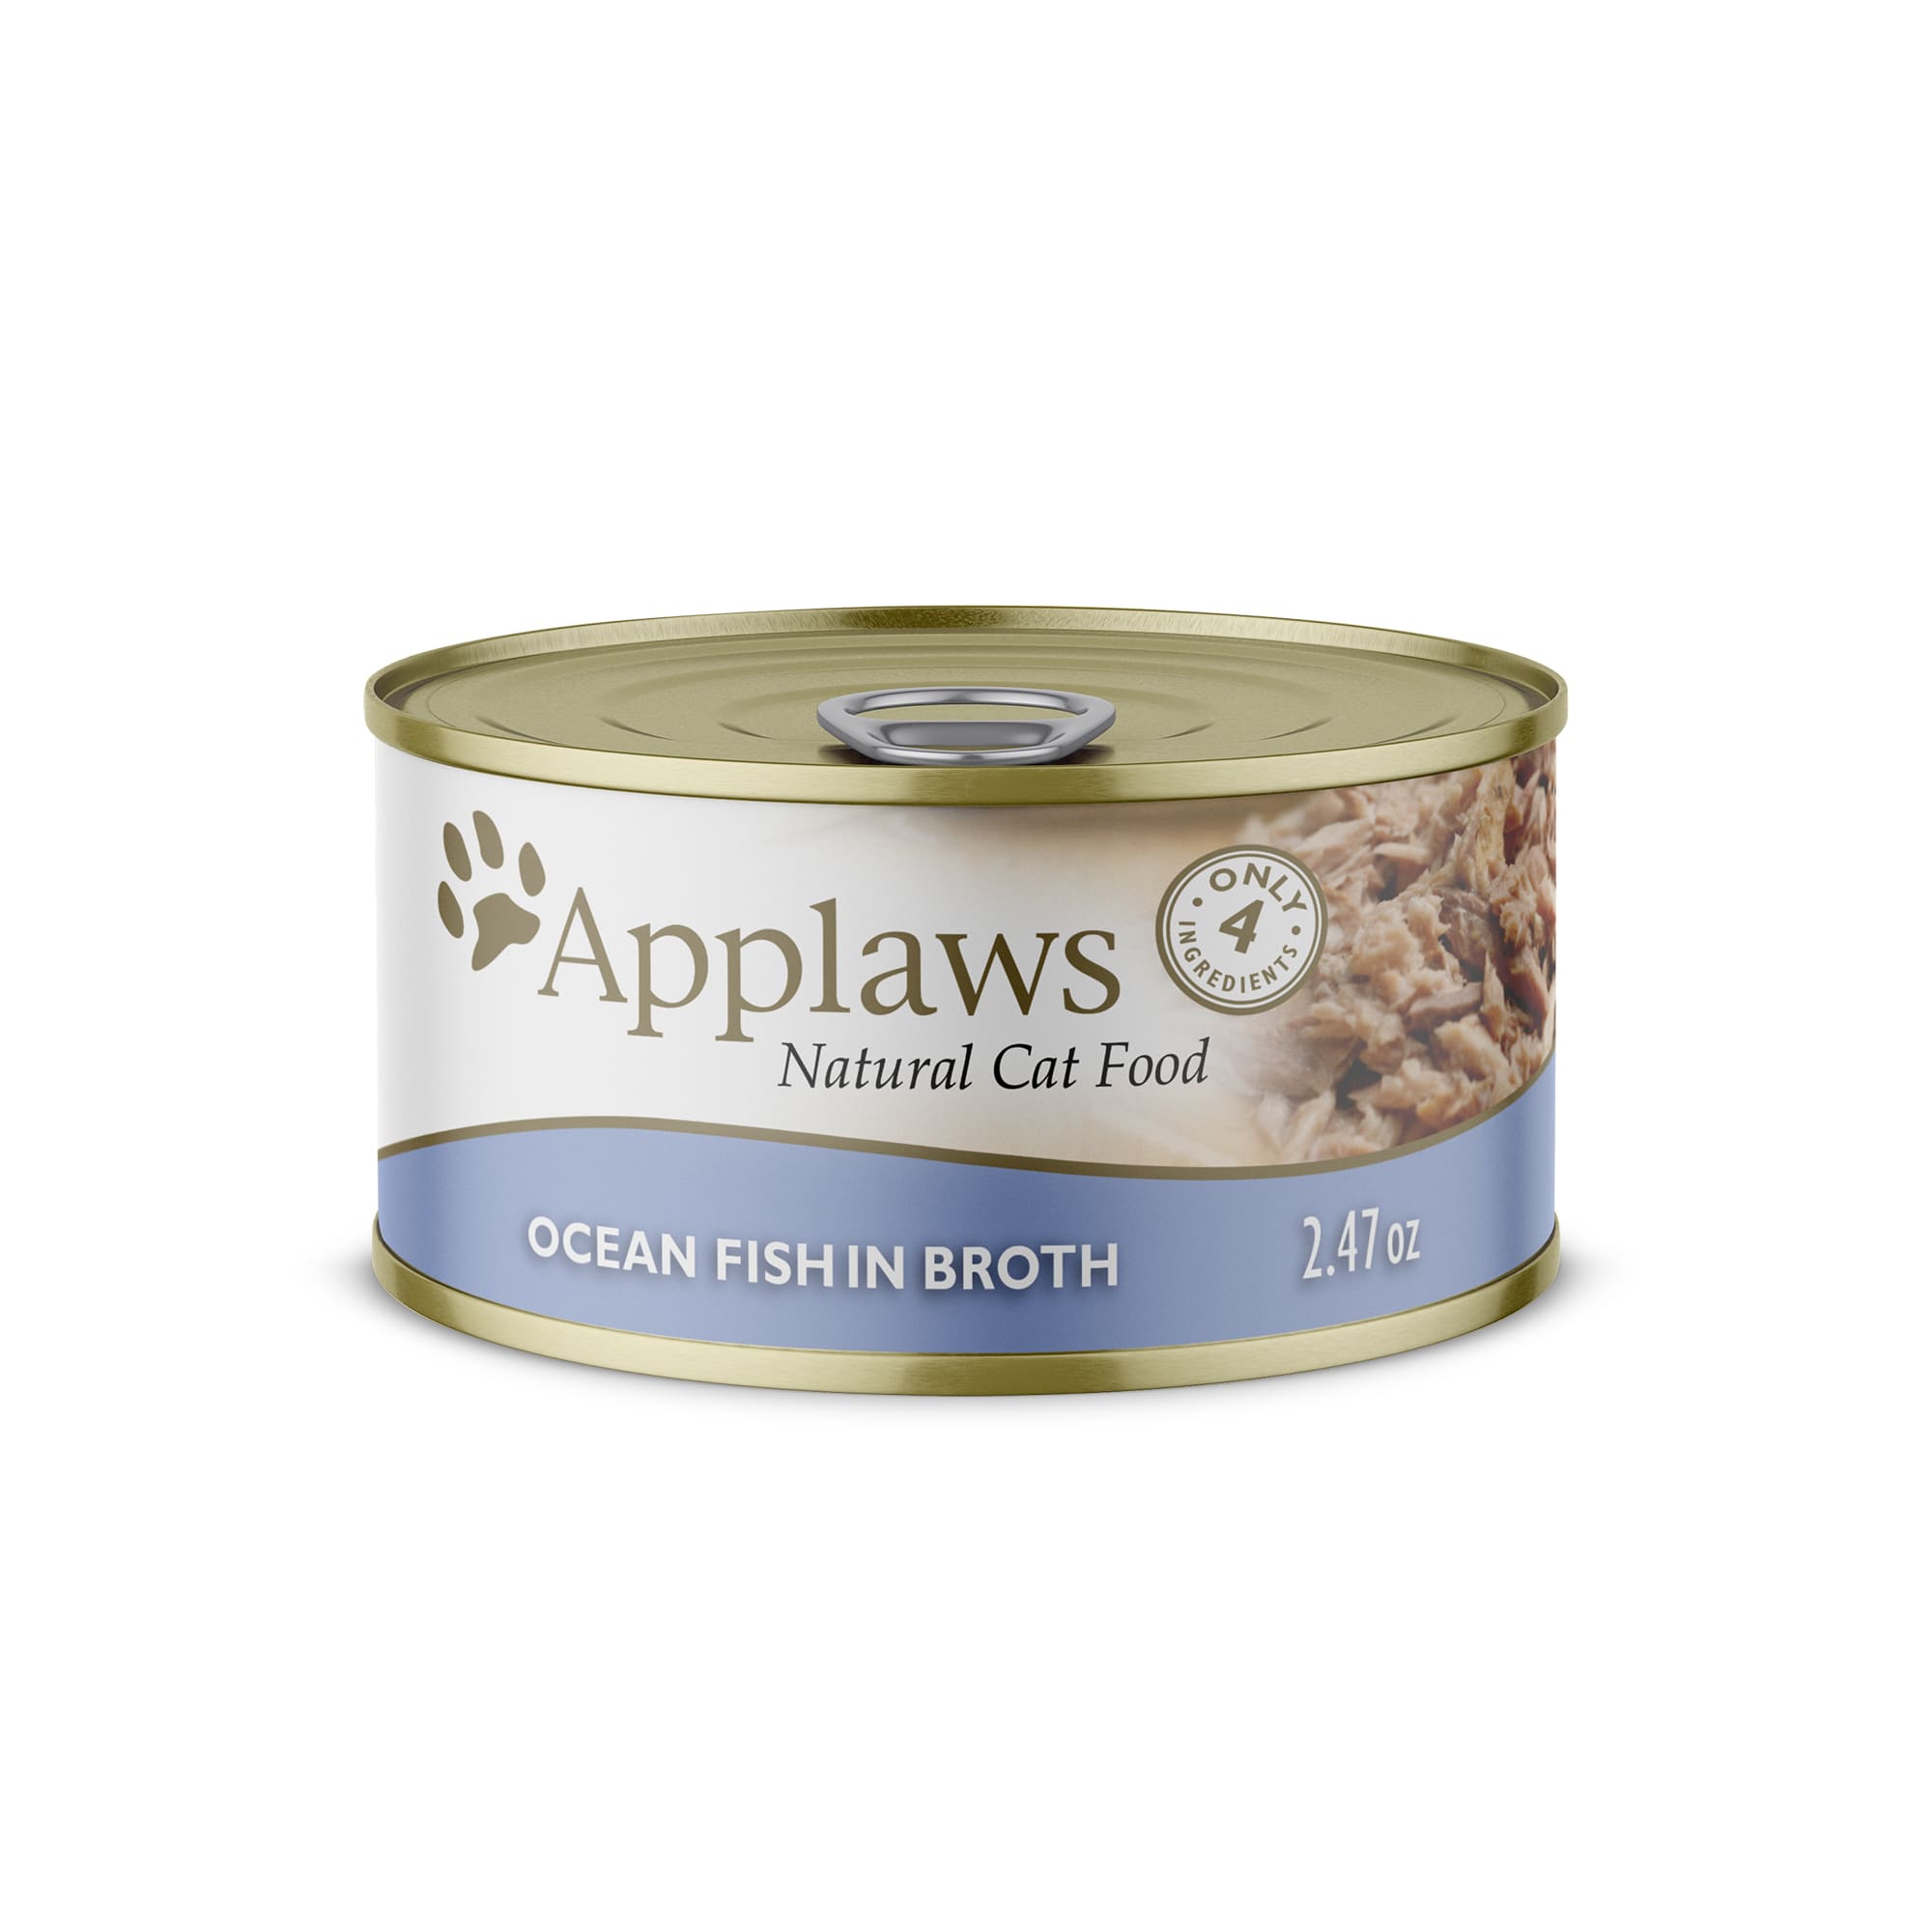 applaws cat food tins